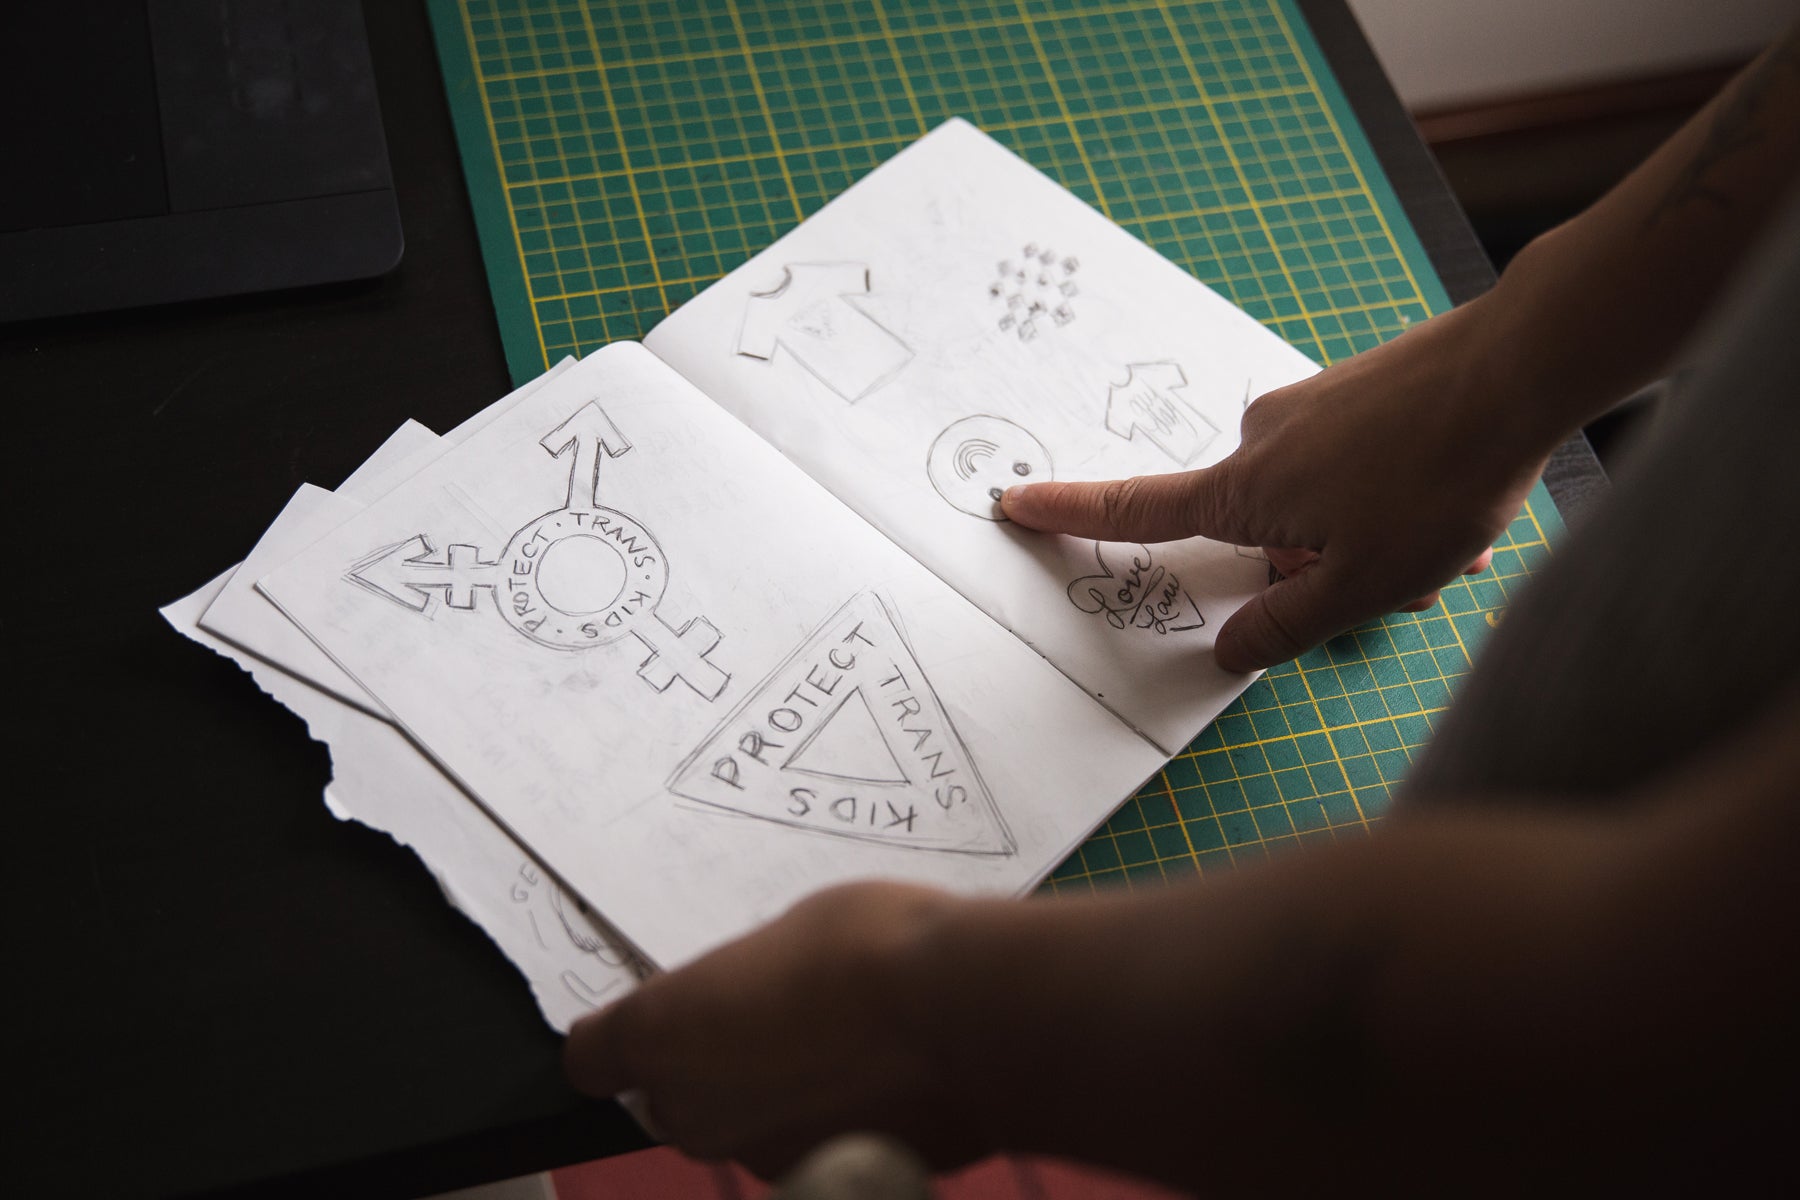 Image of designer Liz Bertorelli's sketch book with four ideas for t shirt designs drawn in pencil. 